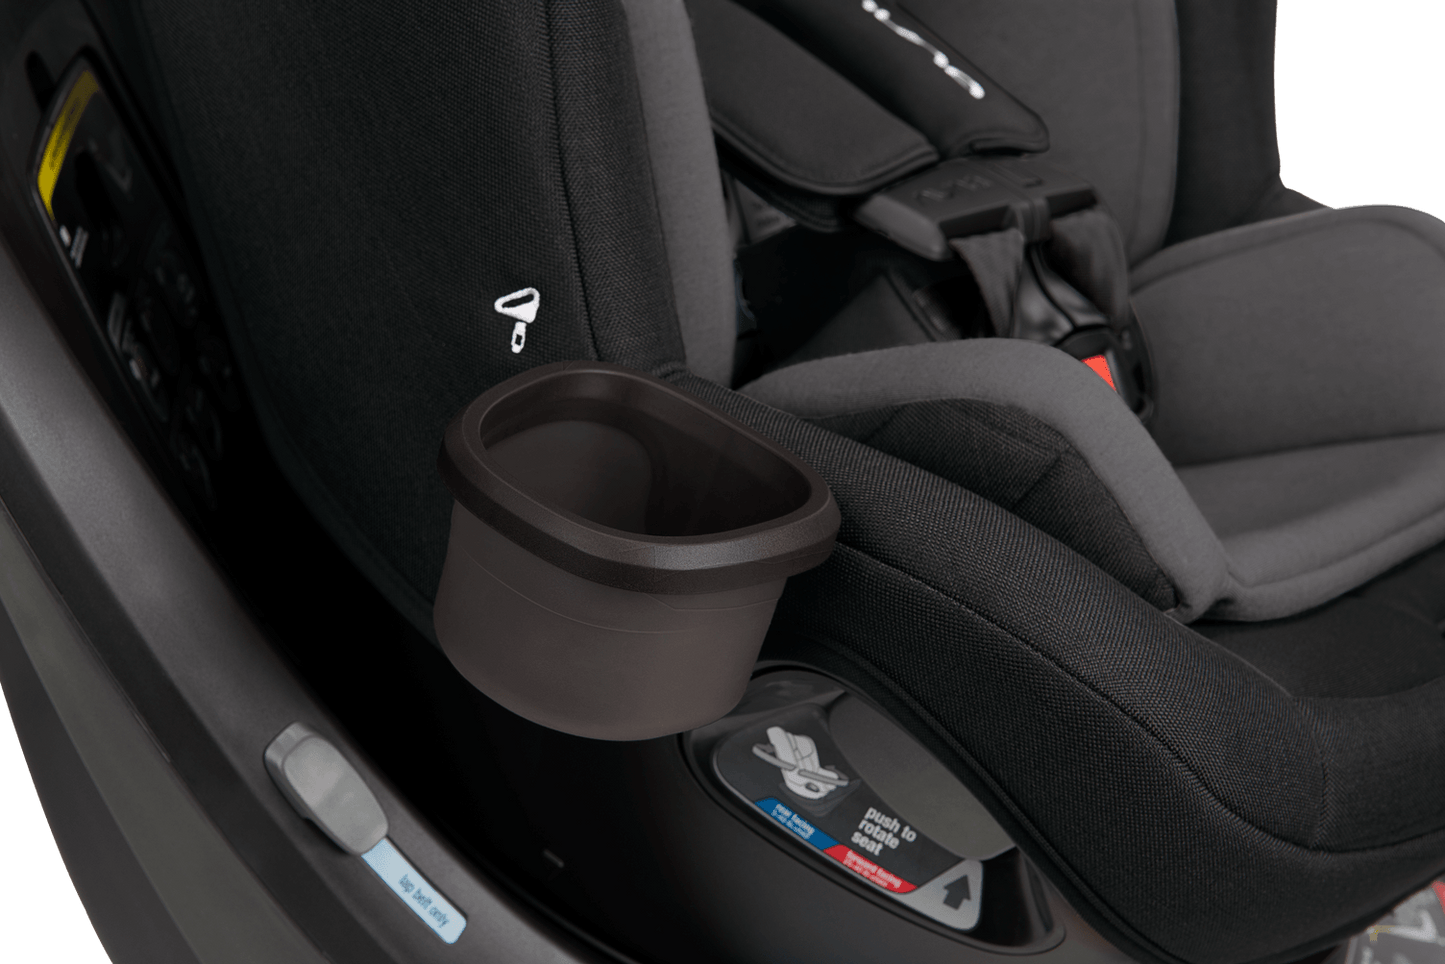 Nuna REVV Rotating Convertible Car Seat - Caviar - Traveling Tikes 